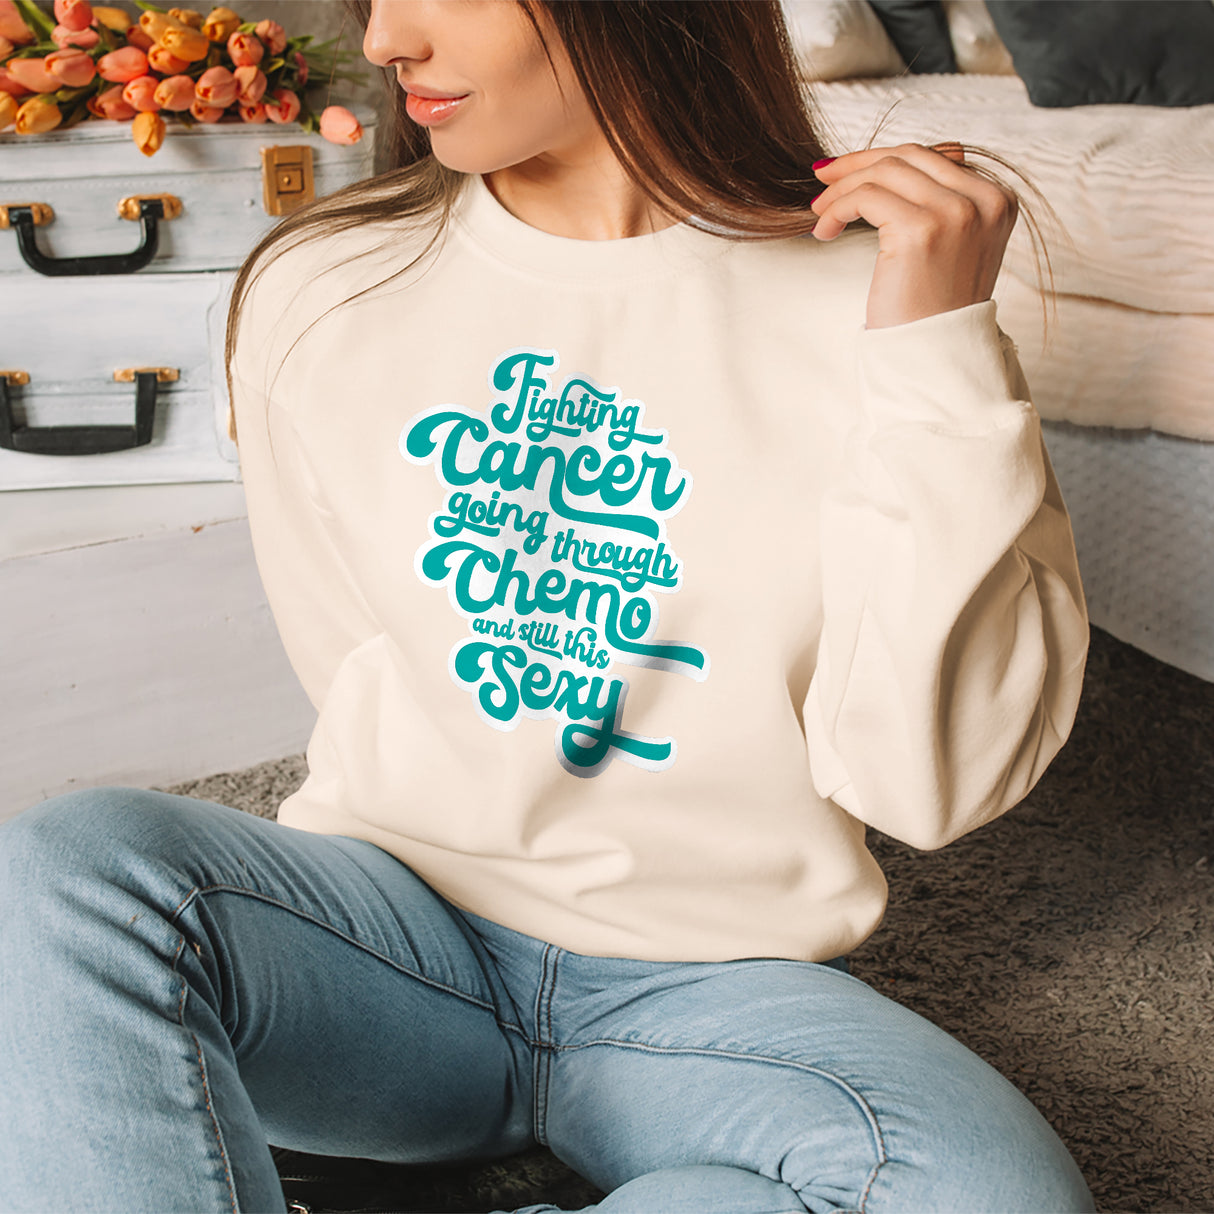 Fighting Chemo&Still This Sexy Adult Sweatshirt